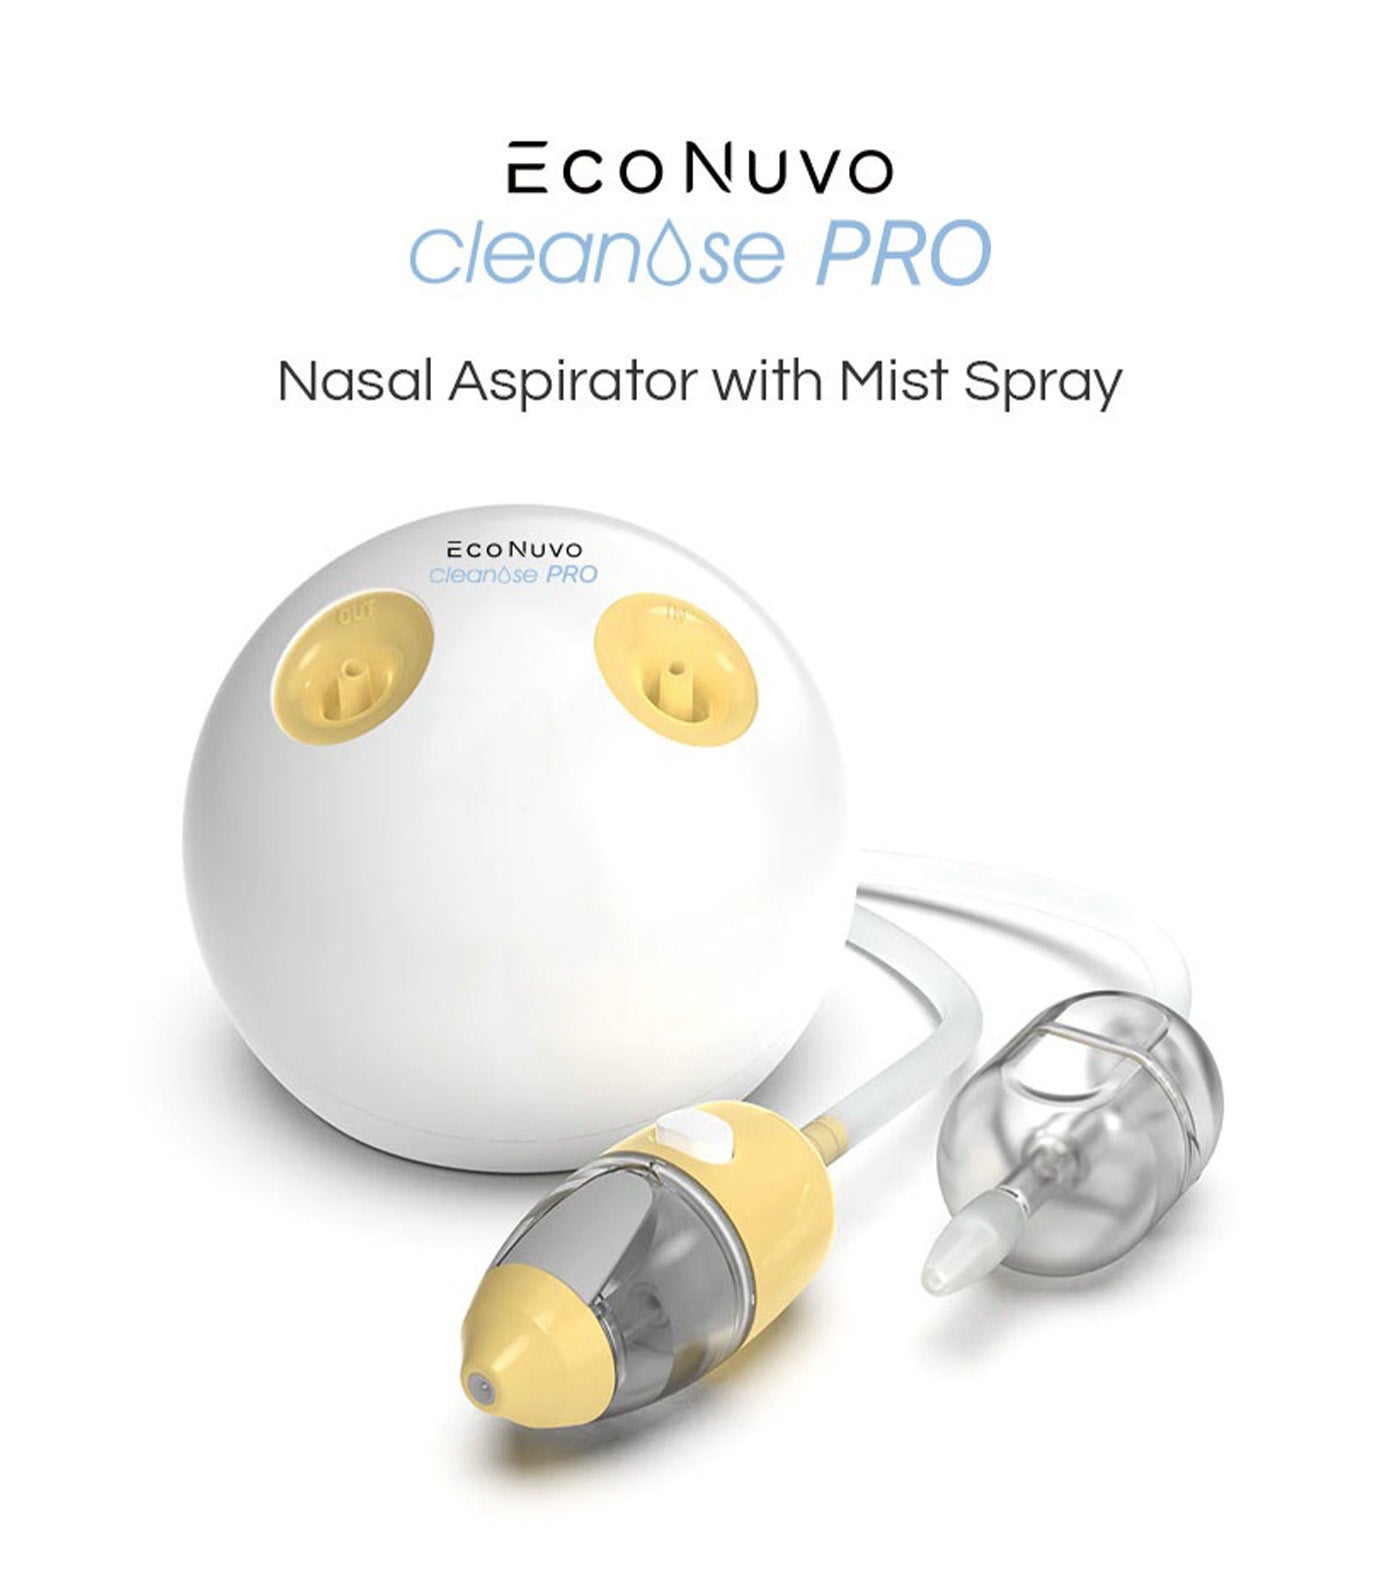 Cleanose Pro Electric Nasal Aspirator